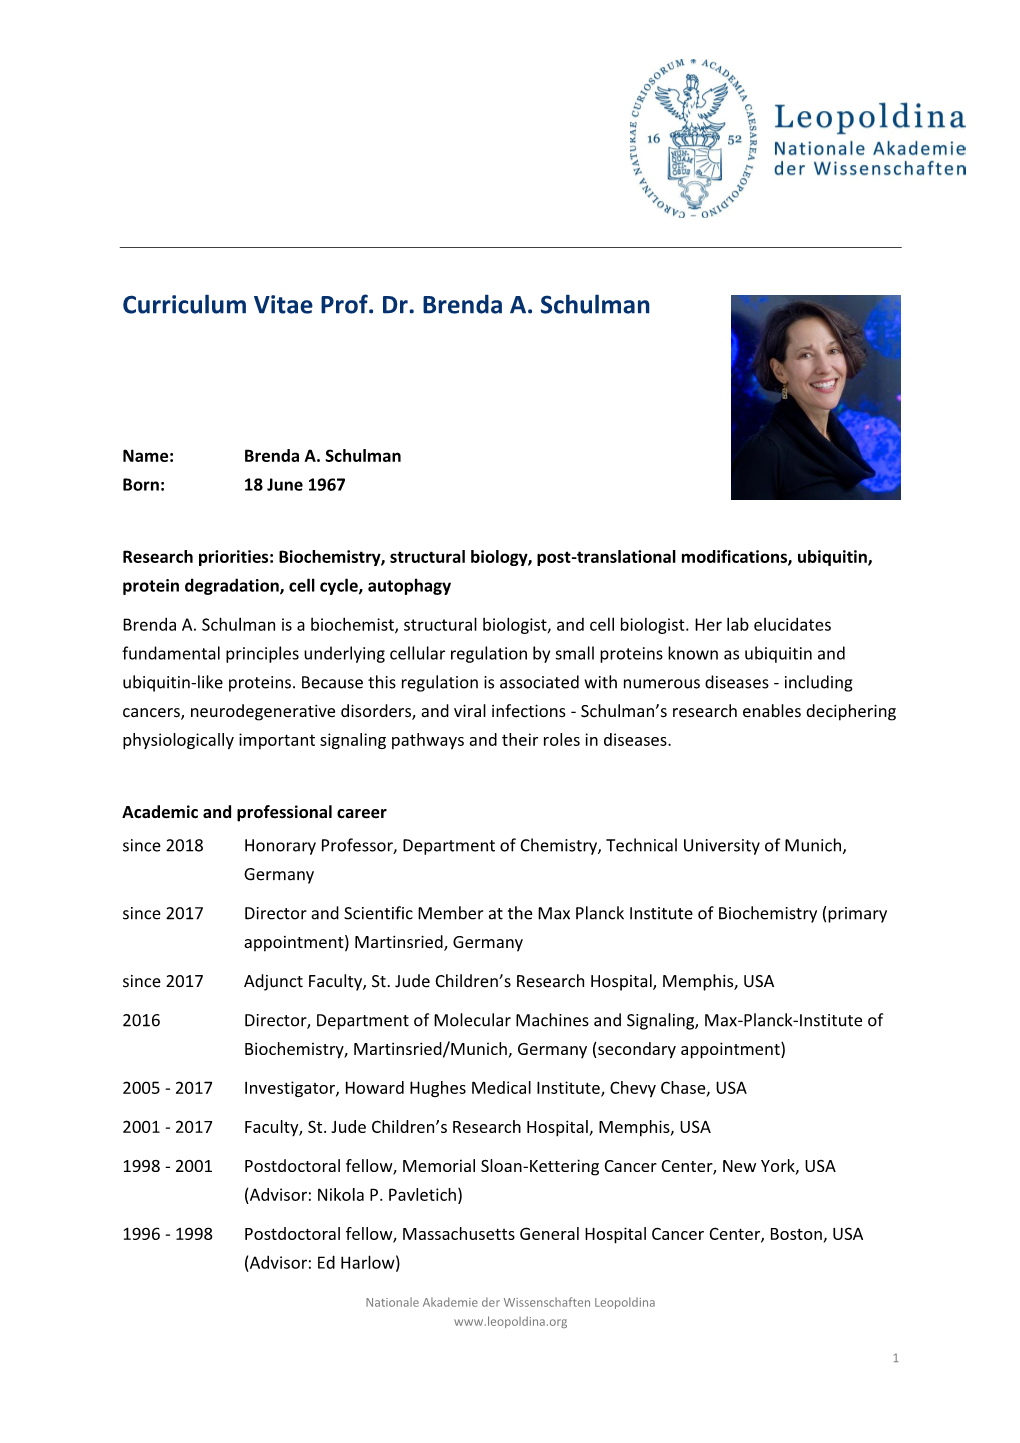 Curriculum Vitae Prof. Dr. Brenda A. Schulman